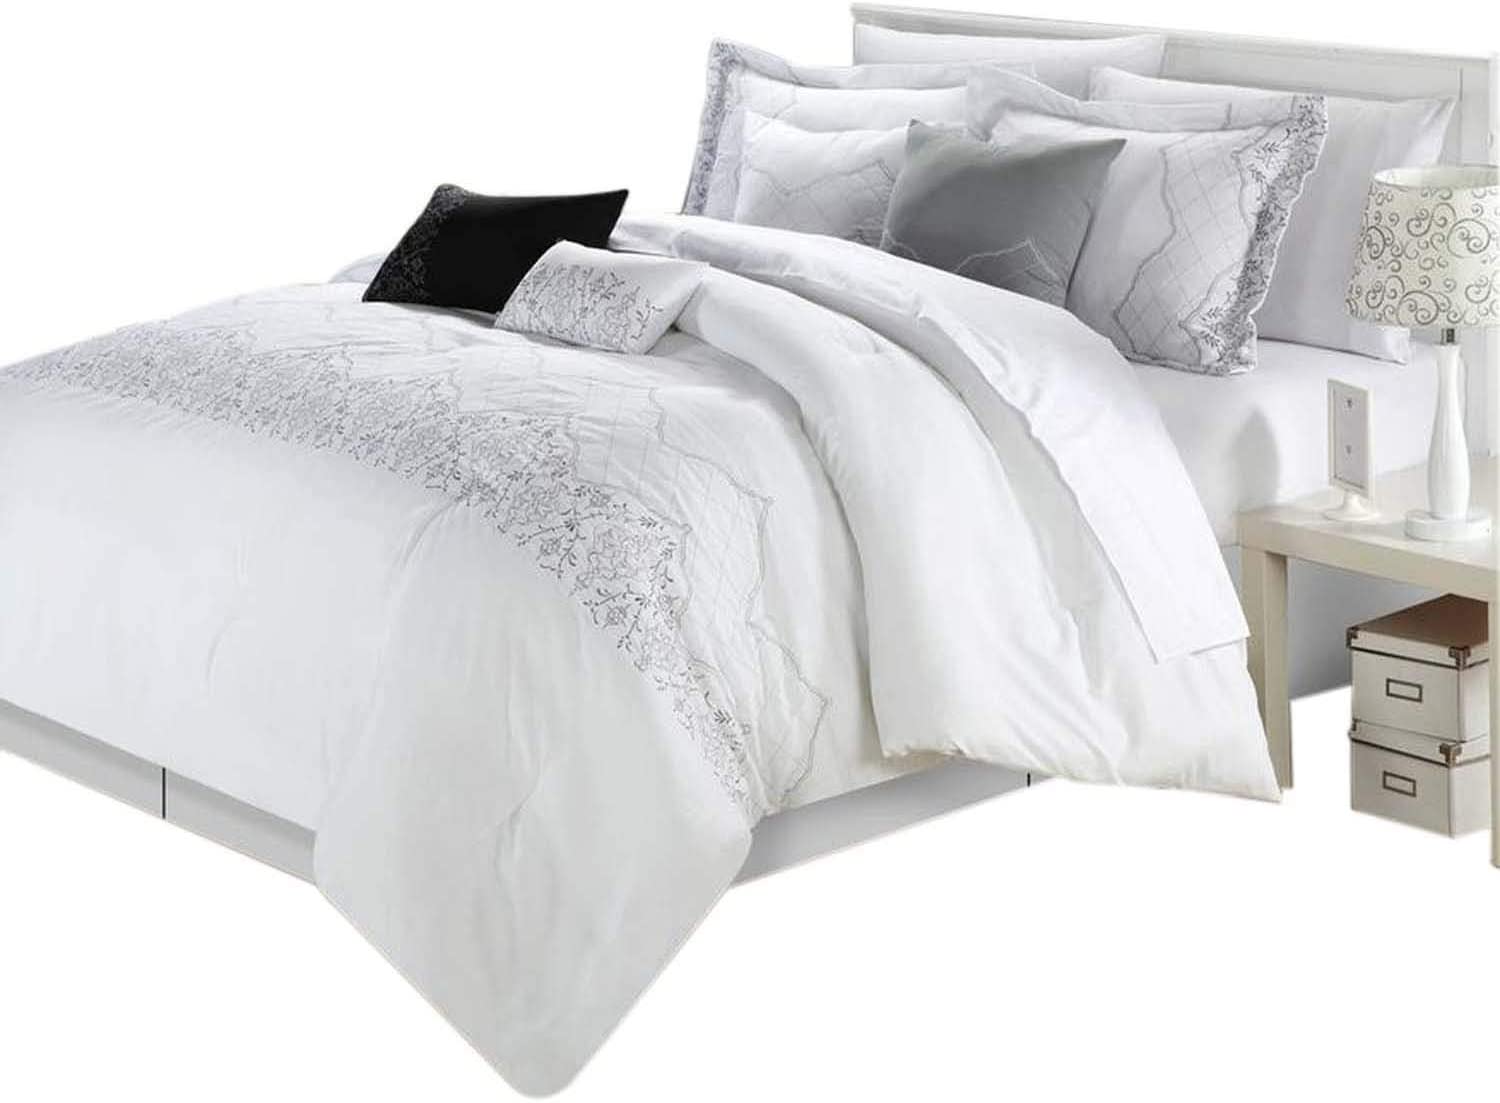 Chic Home Grace 8-Piece Comforter Set, King, White | eBay